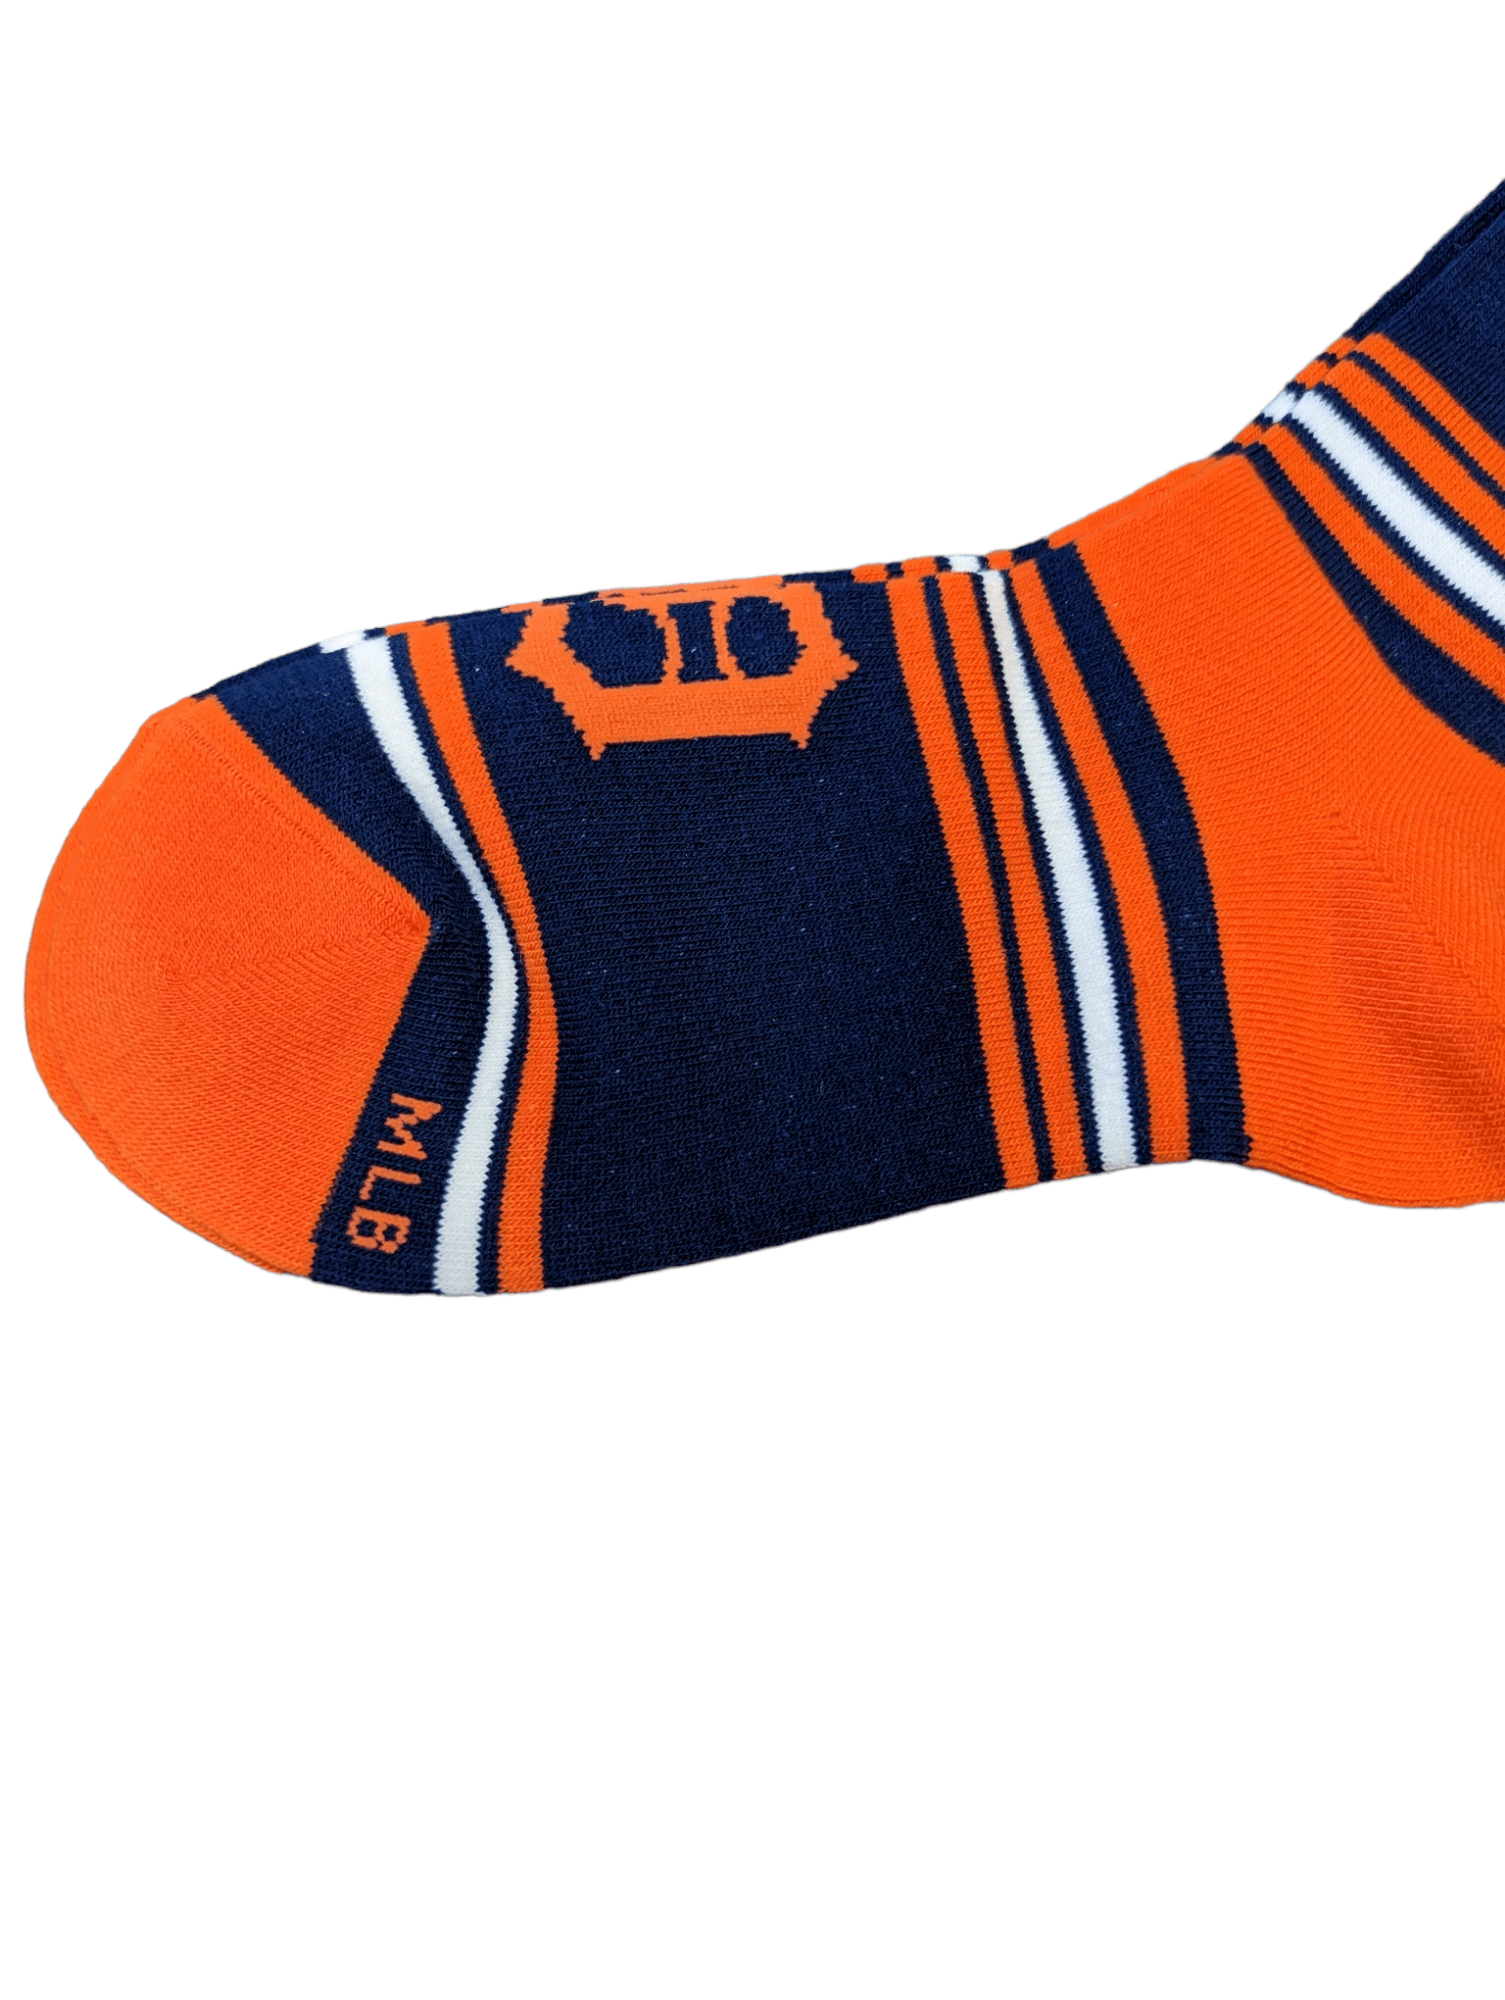 For Bare Feet Apparel & Accessories Detroit Tigers Go Team Socks